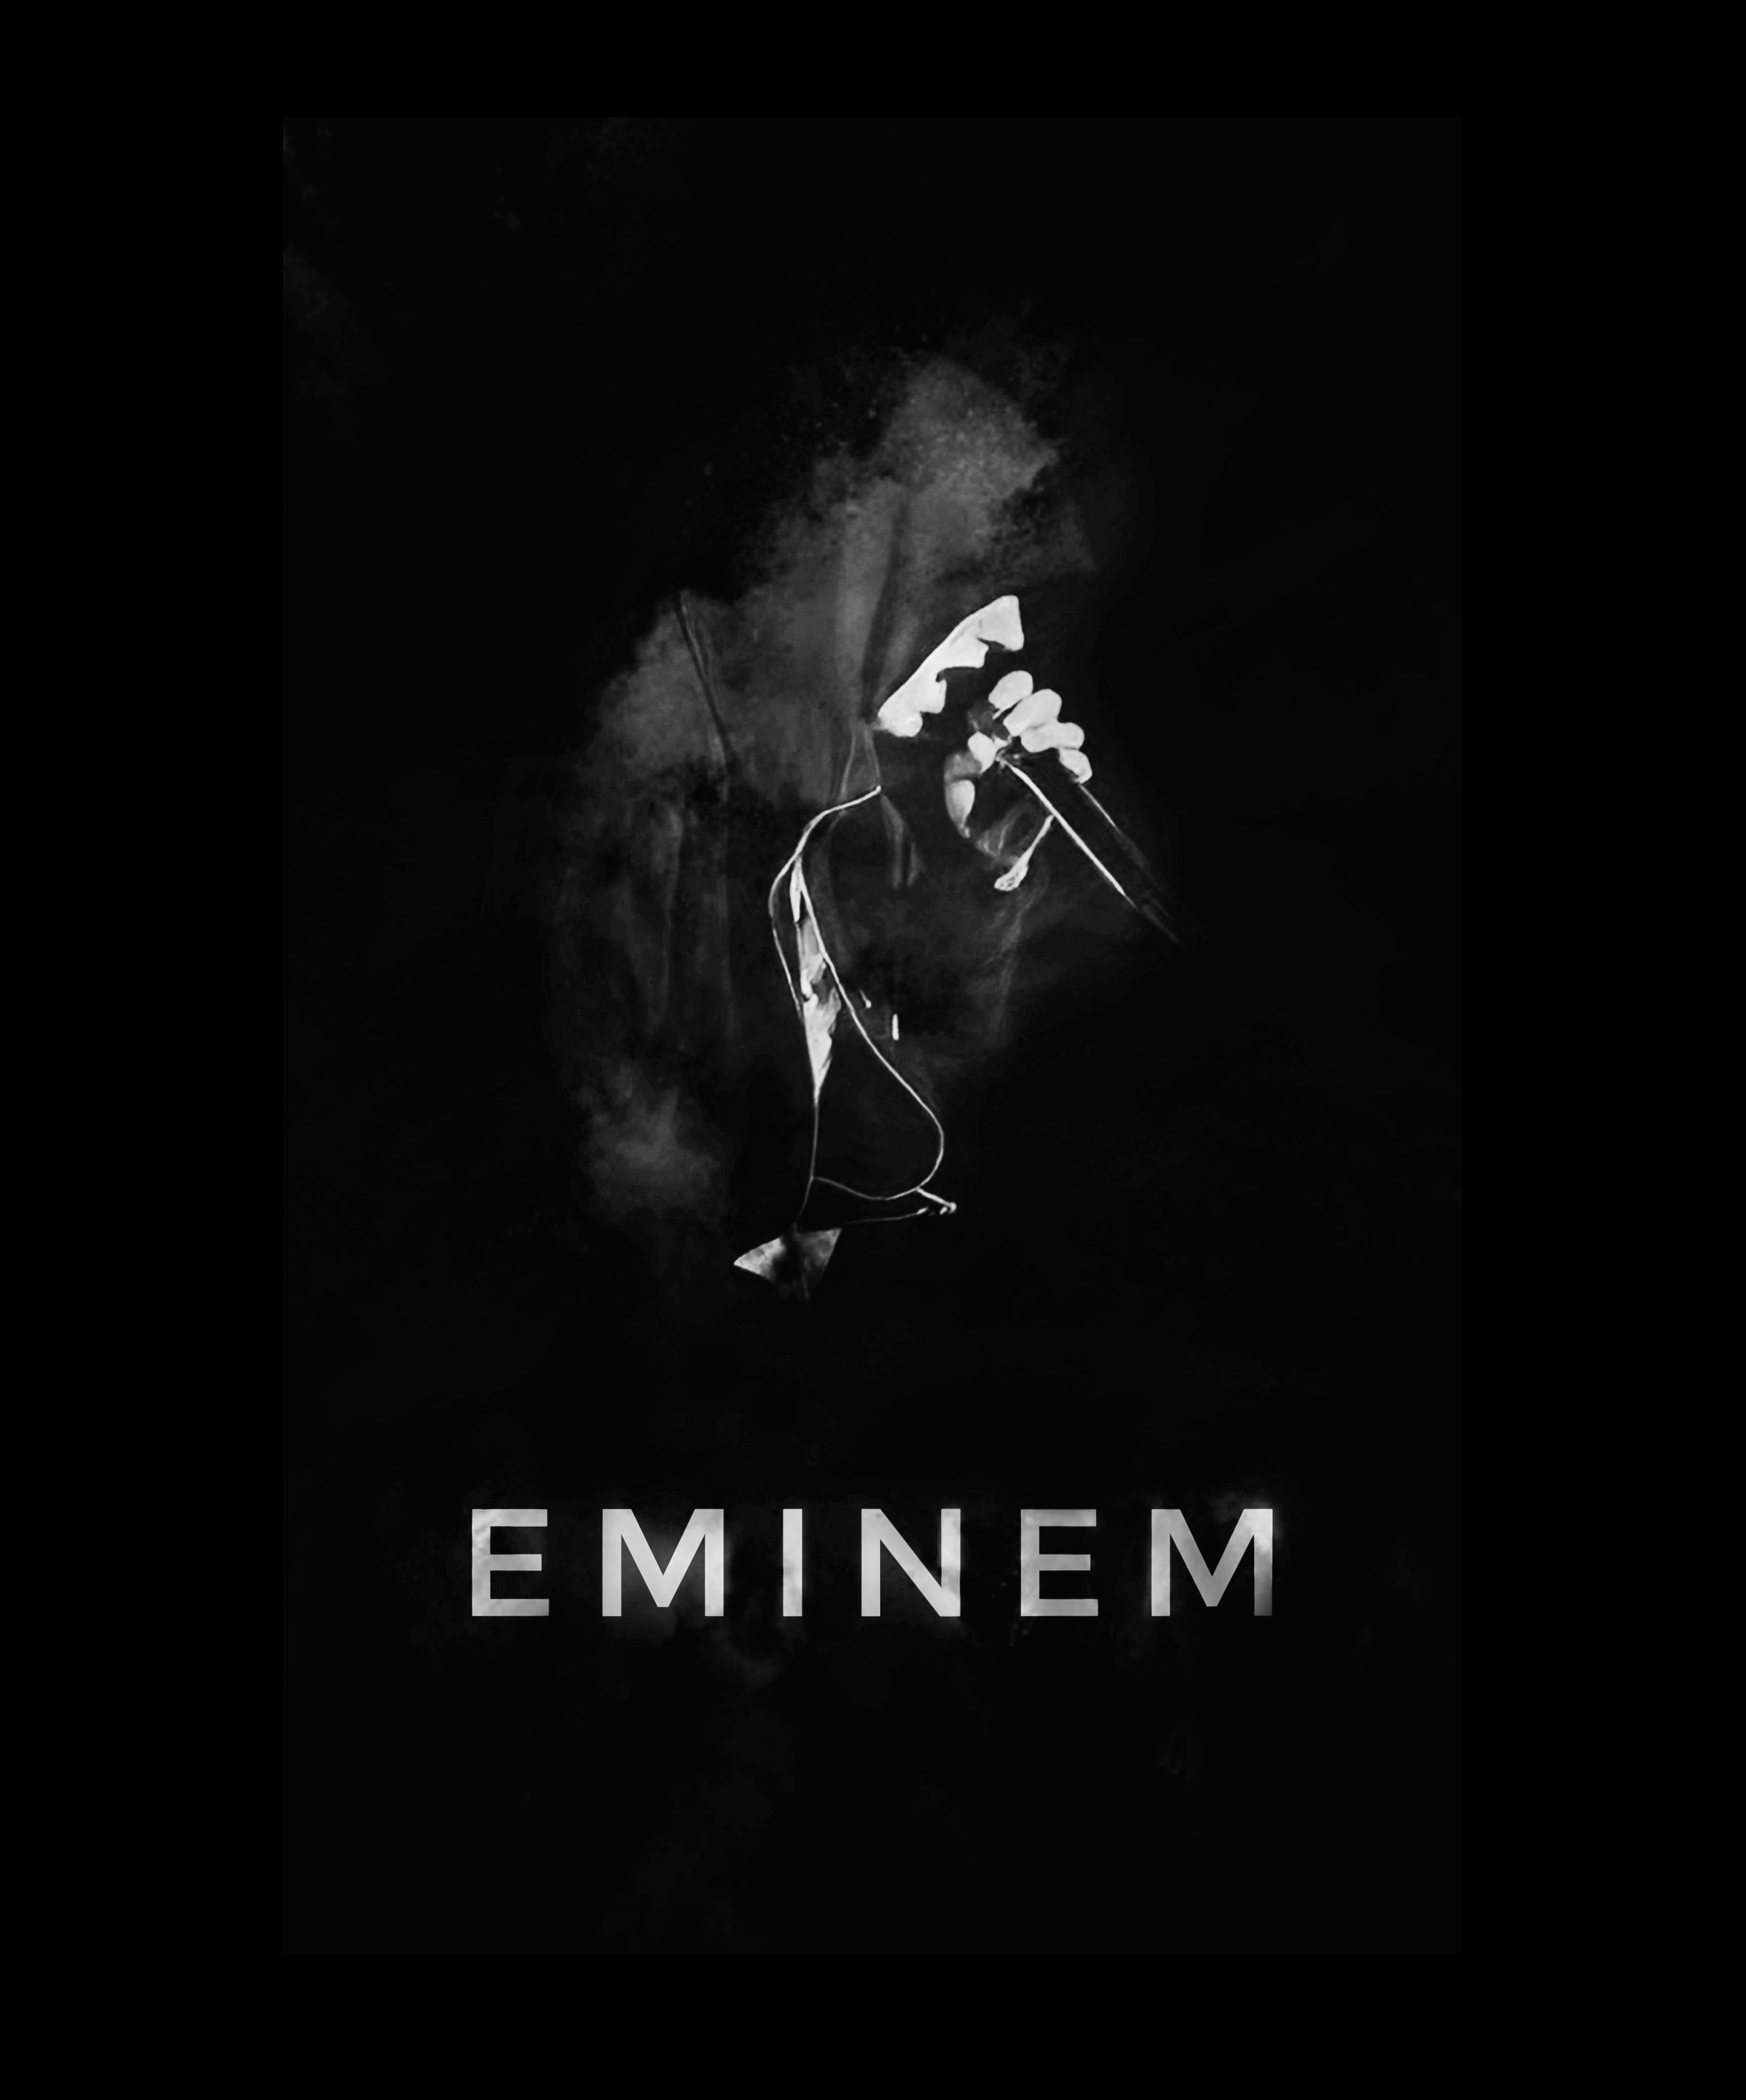 Eminem 2021 Wallpapers - Wallpaper Cave